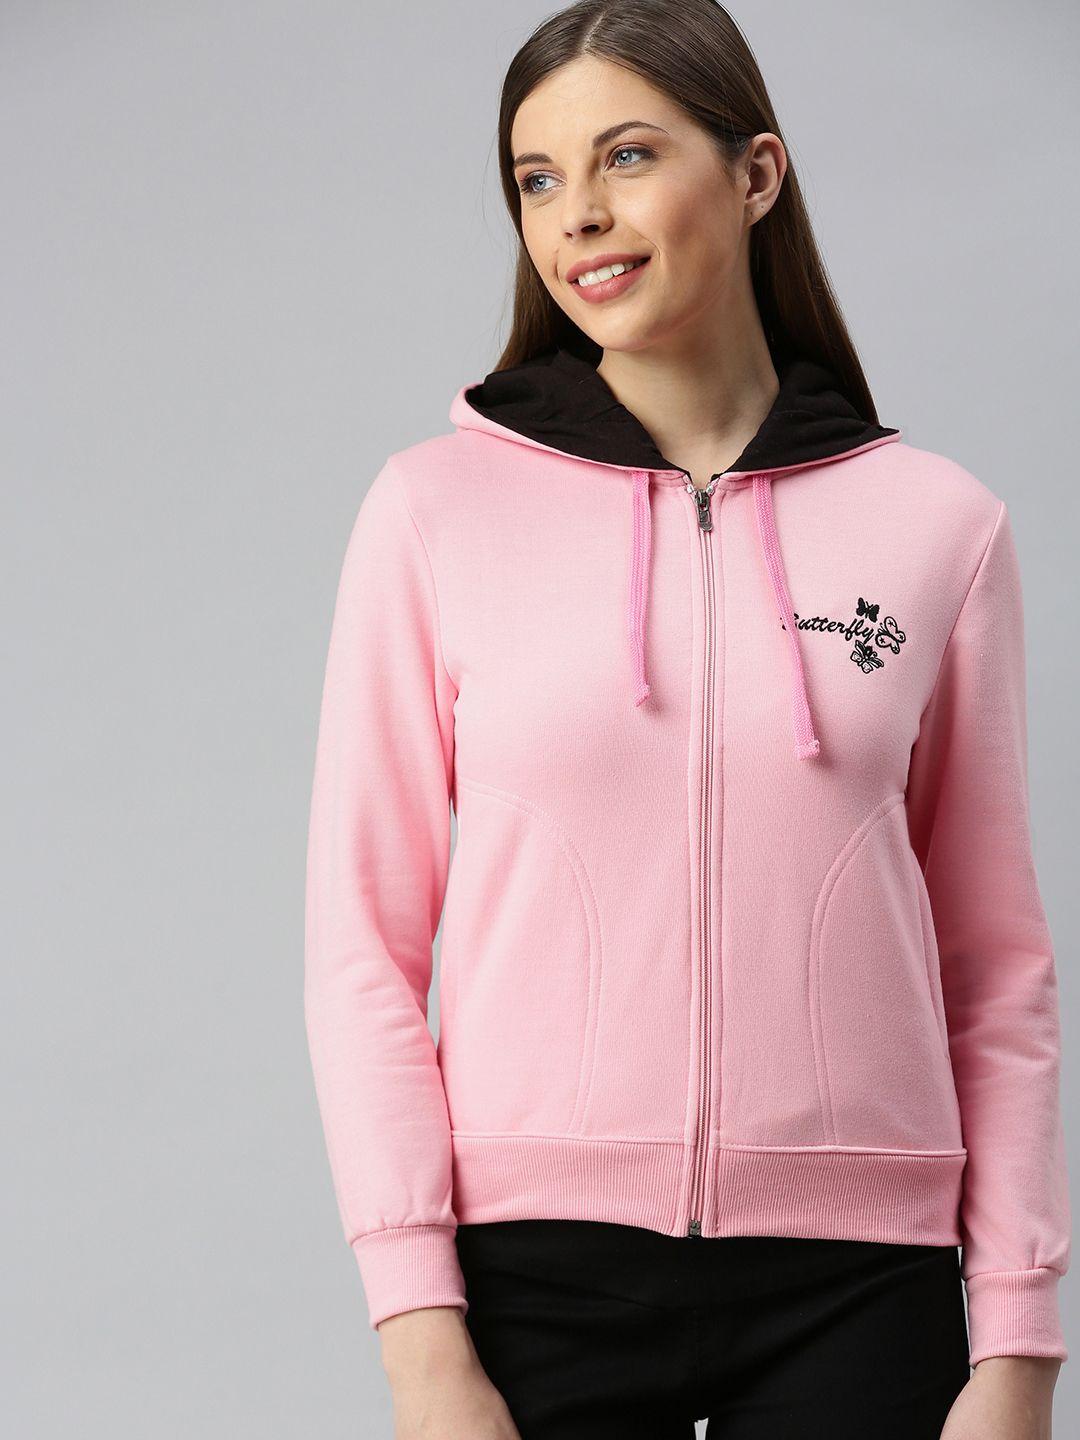 adbucks-women-pink-solid-hooded-sweatshirt